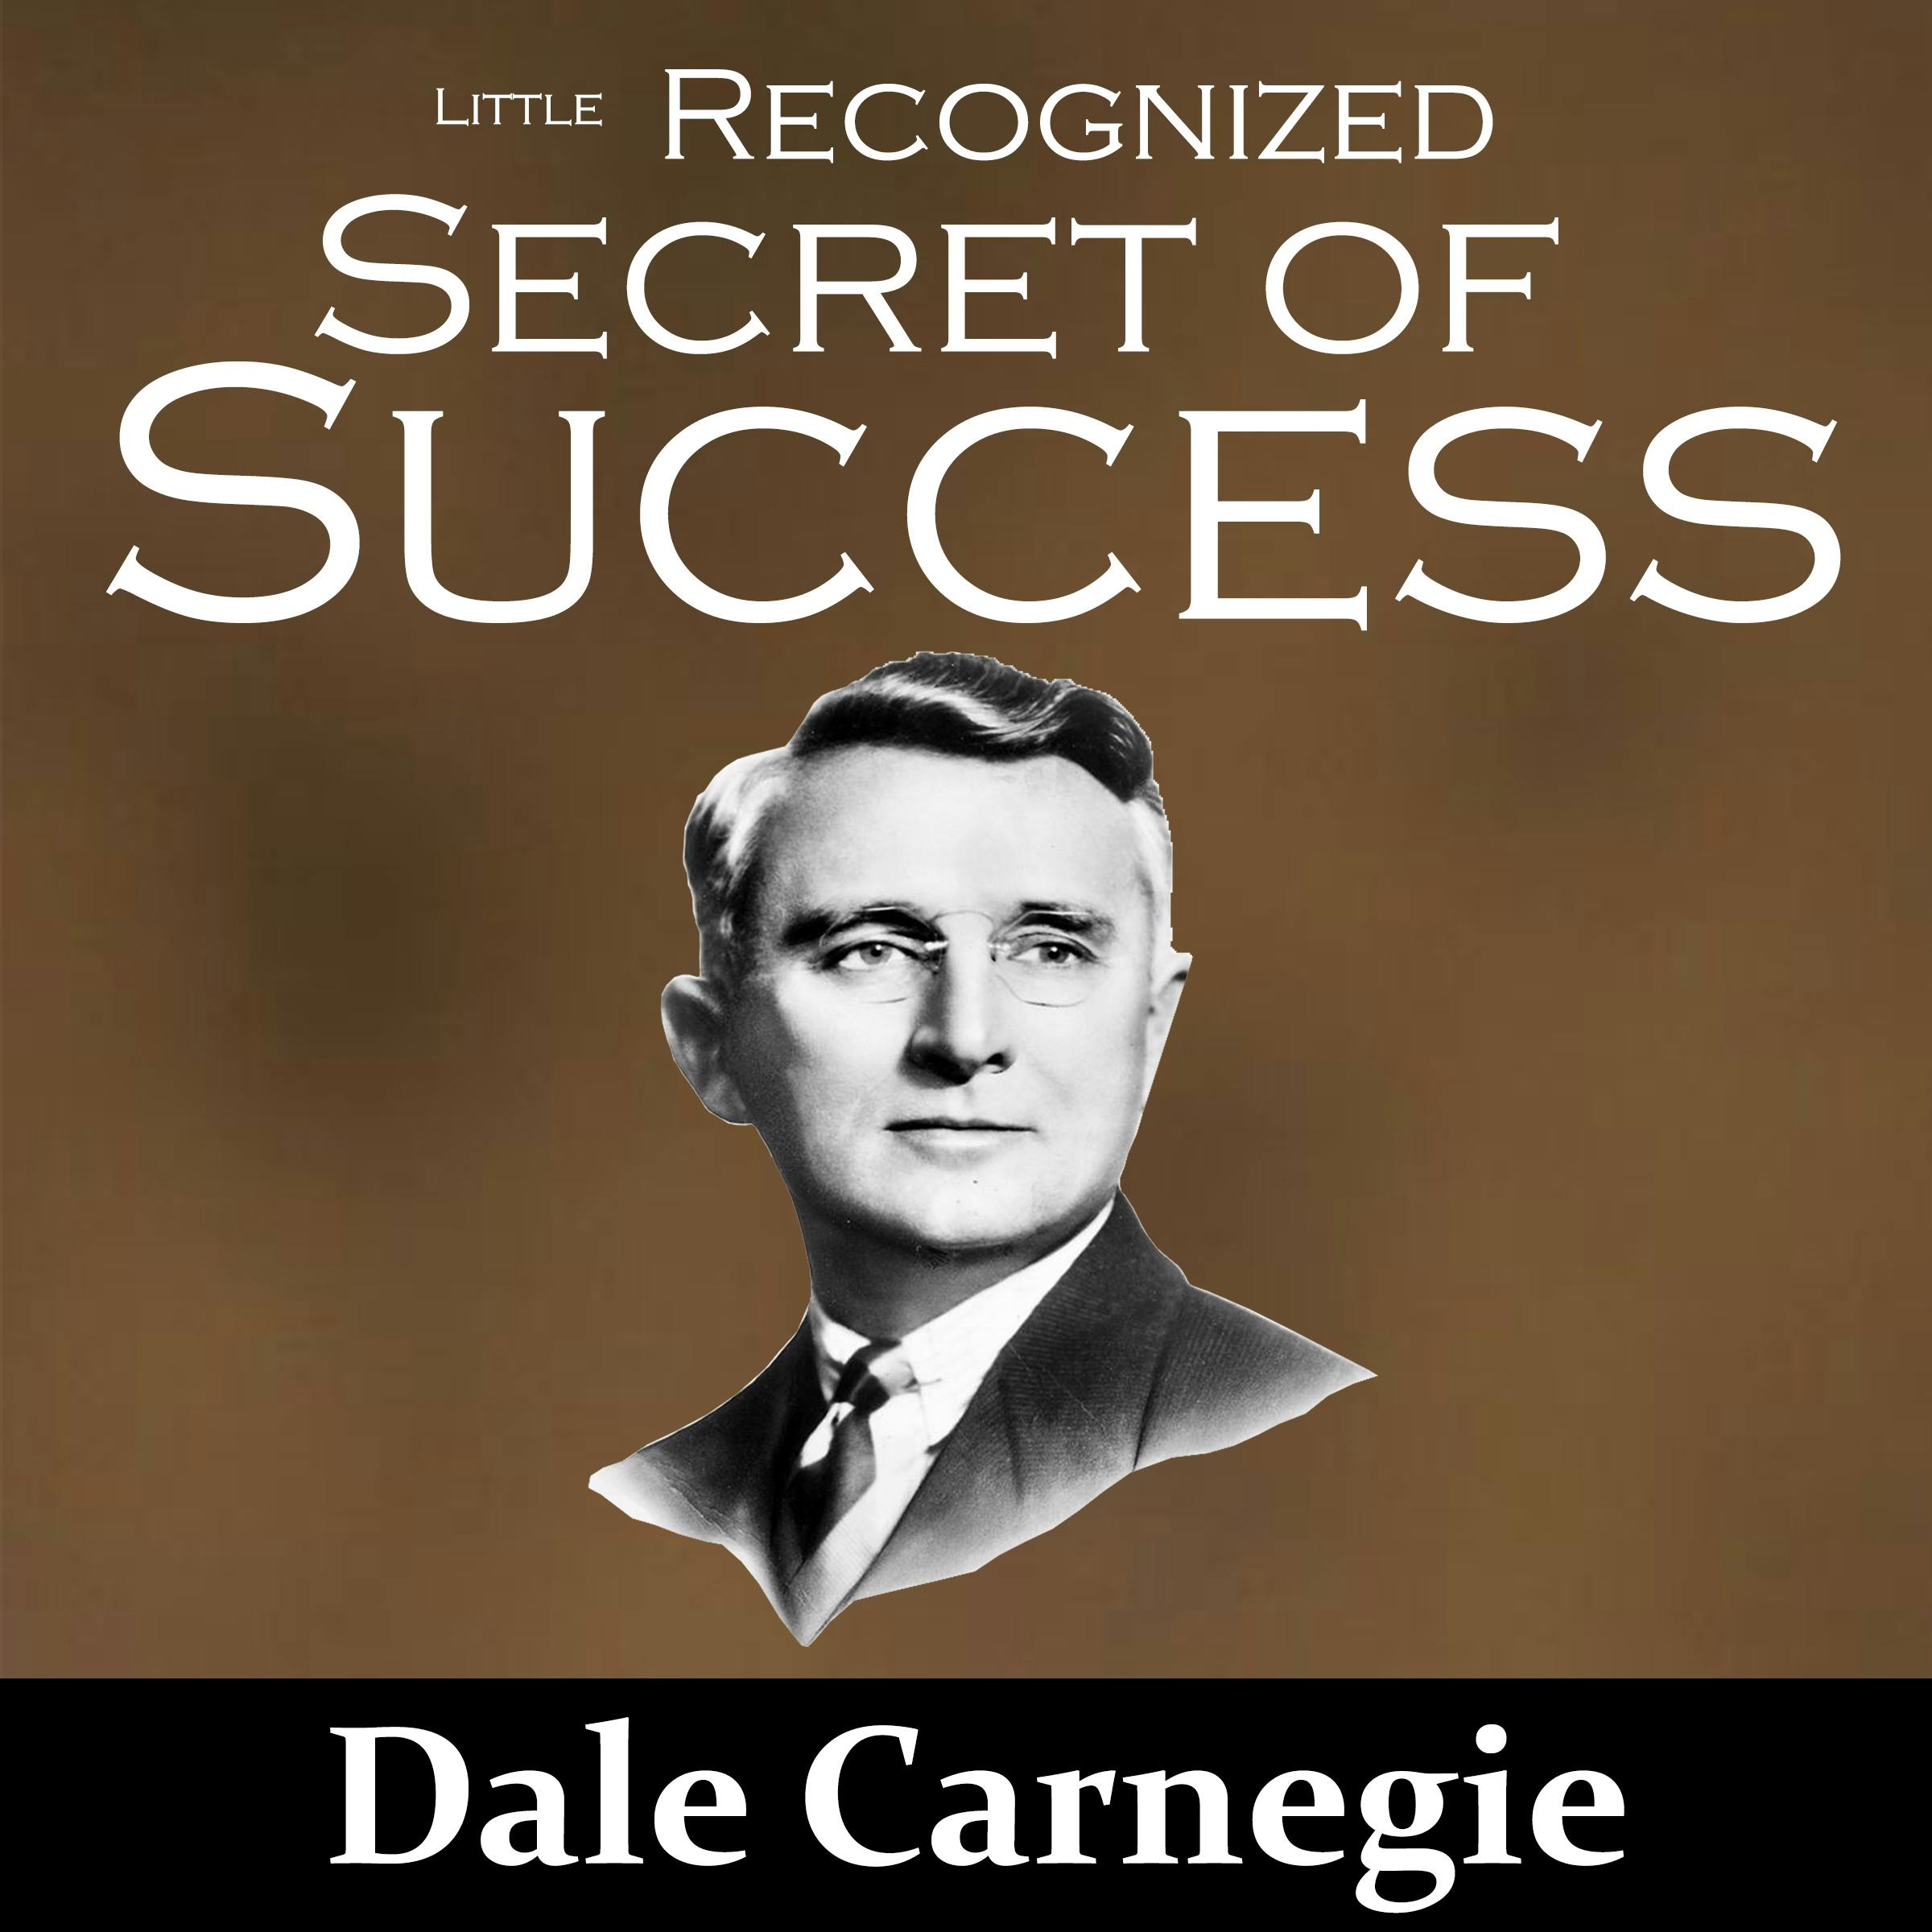 The Little Recognized Secret of Success - undefined